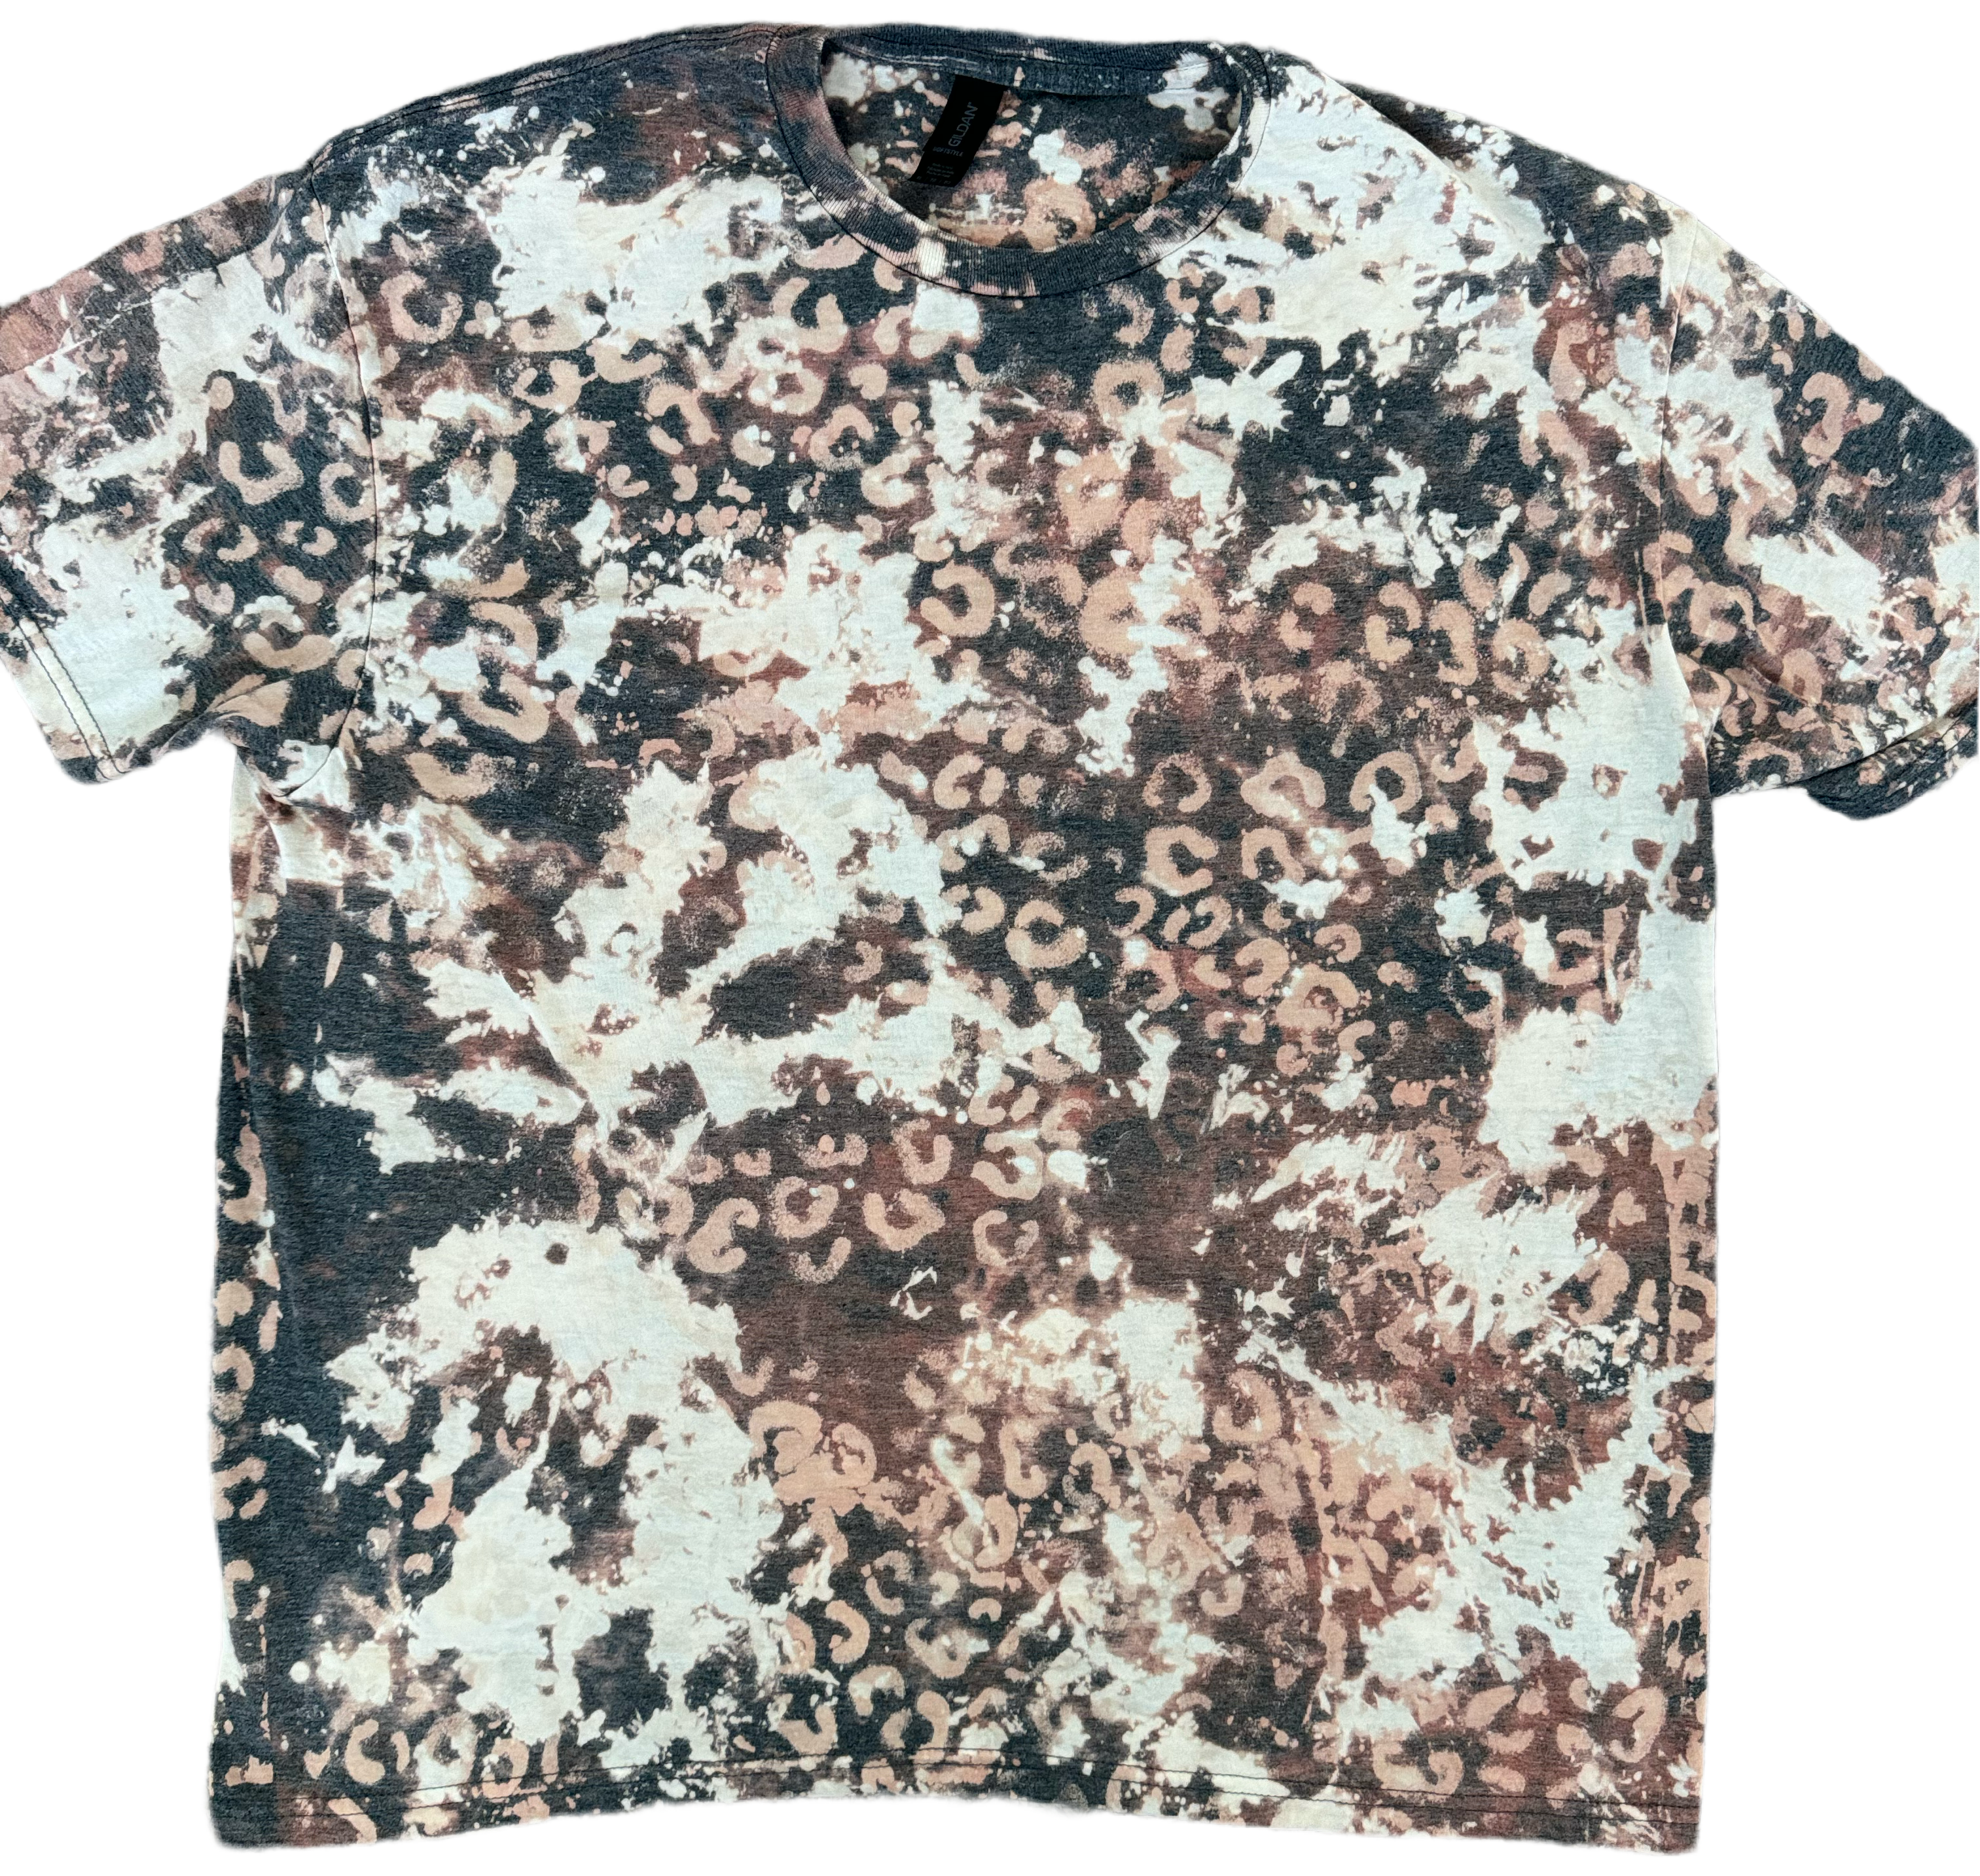 Leopard Print T Shirt